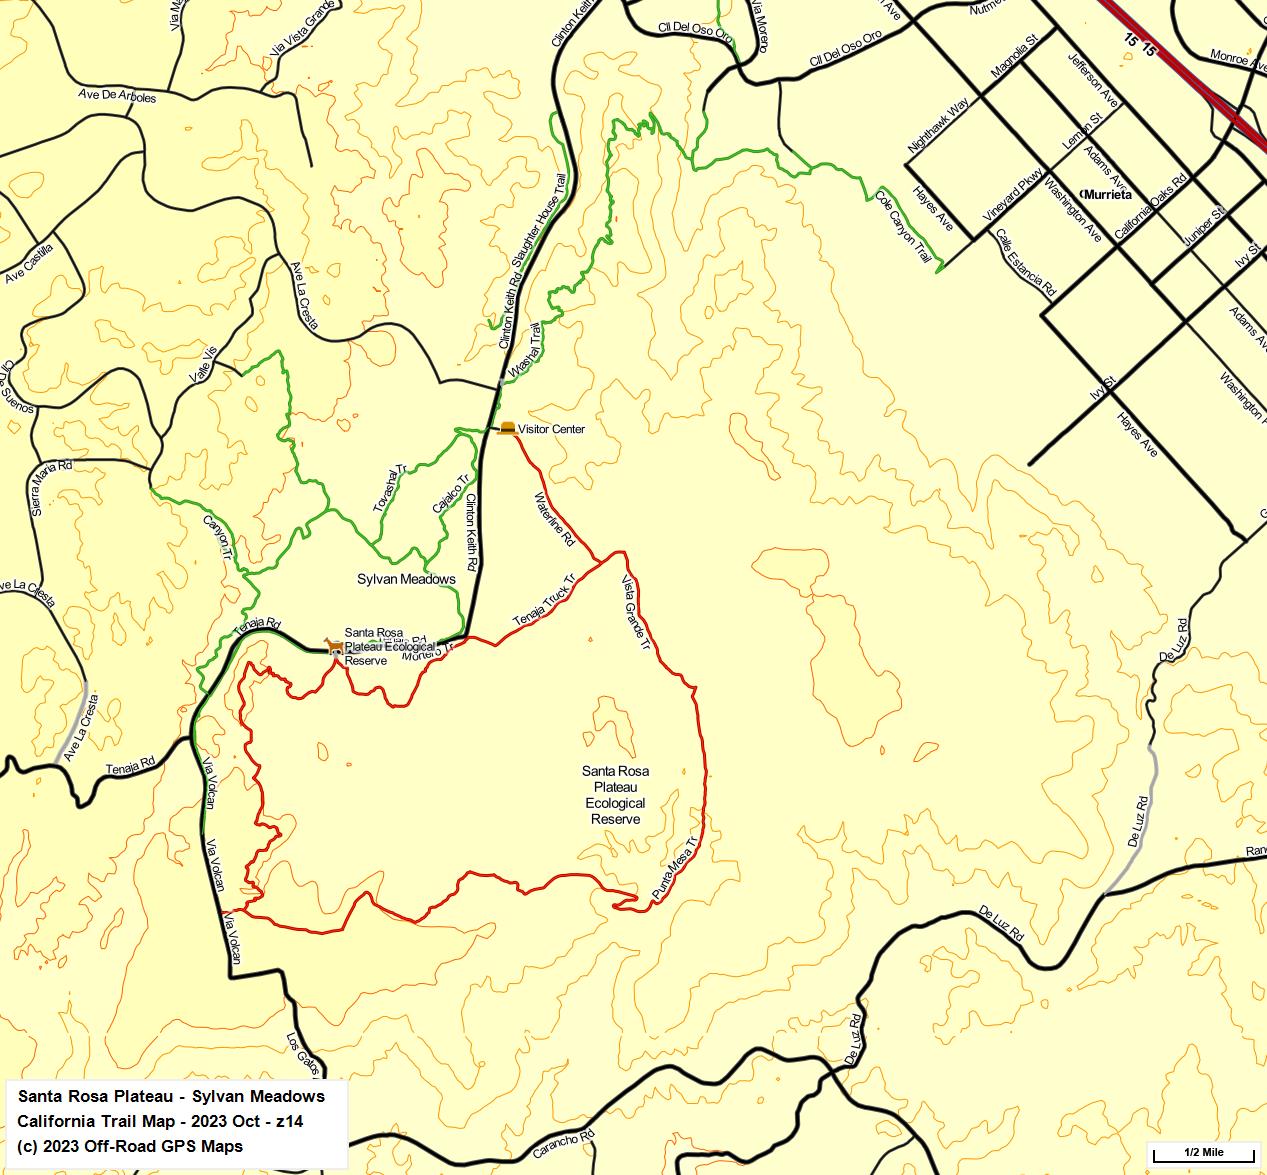 Santa Rosa Plateau - Sylvan Meadows z 14